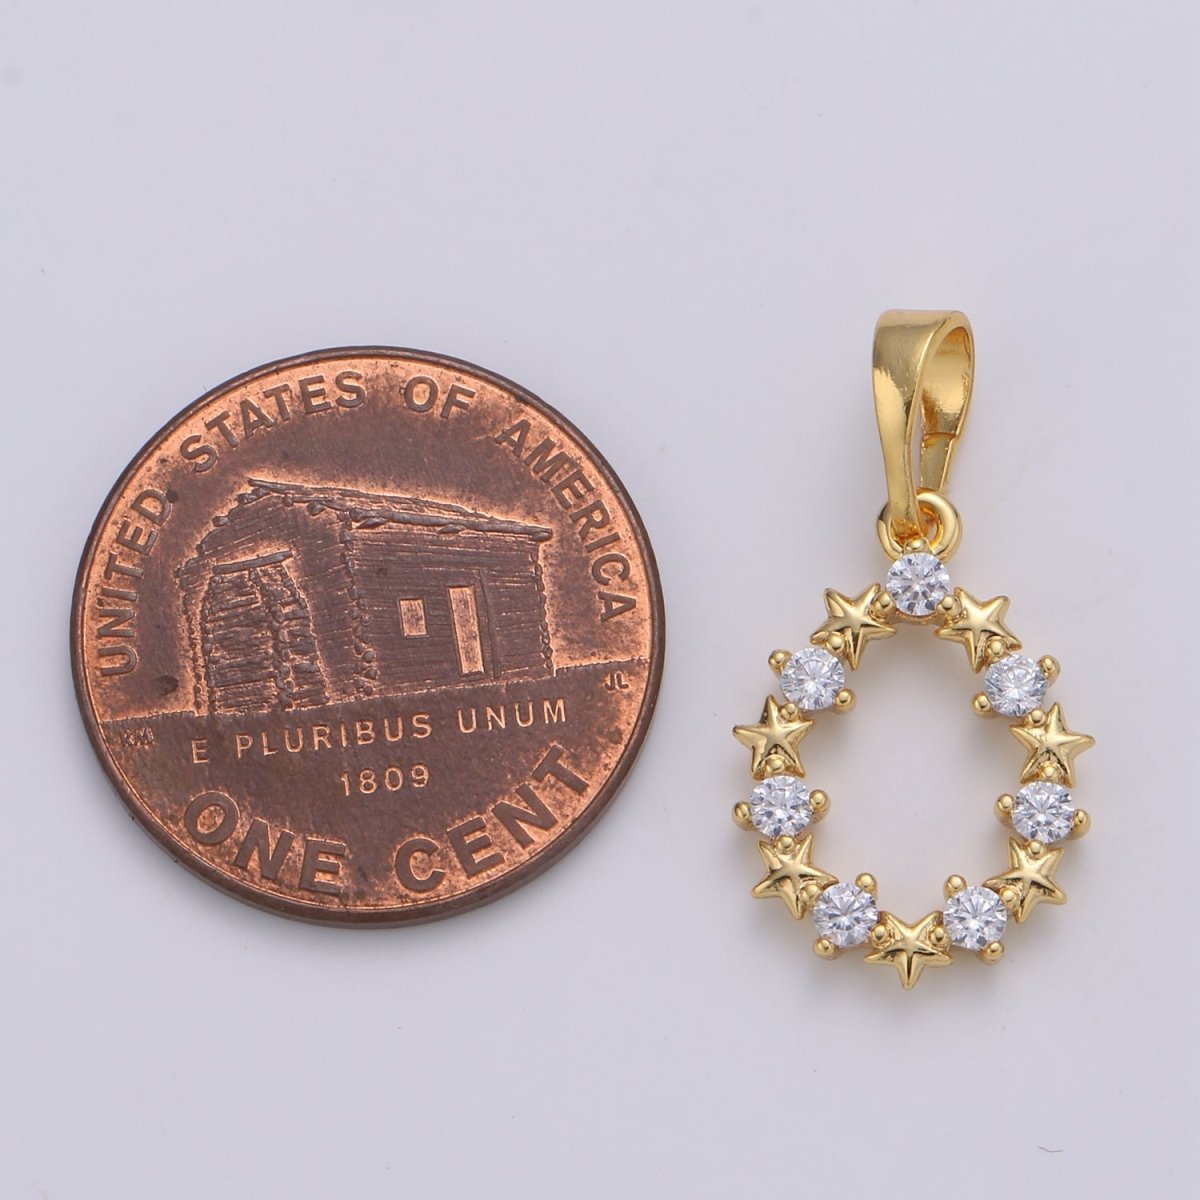 DEL- 24K Gold Filled Dainty Star Tear Drop Oval Shape Cubic Zirconia Necklace Pendant Bracelet Earring Charm for Jewelry Making 22mmx11.5mm - DLUXCA